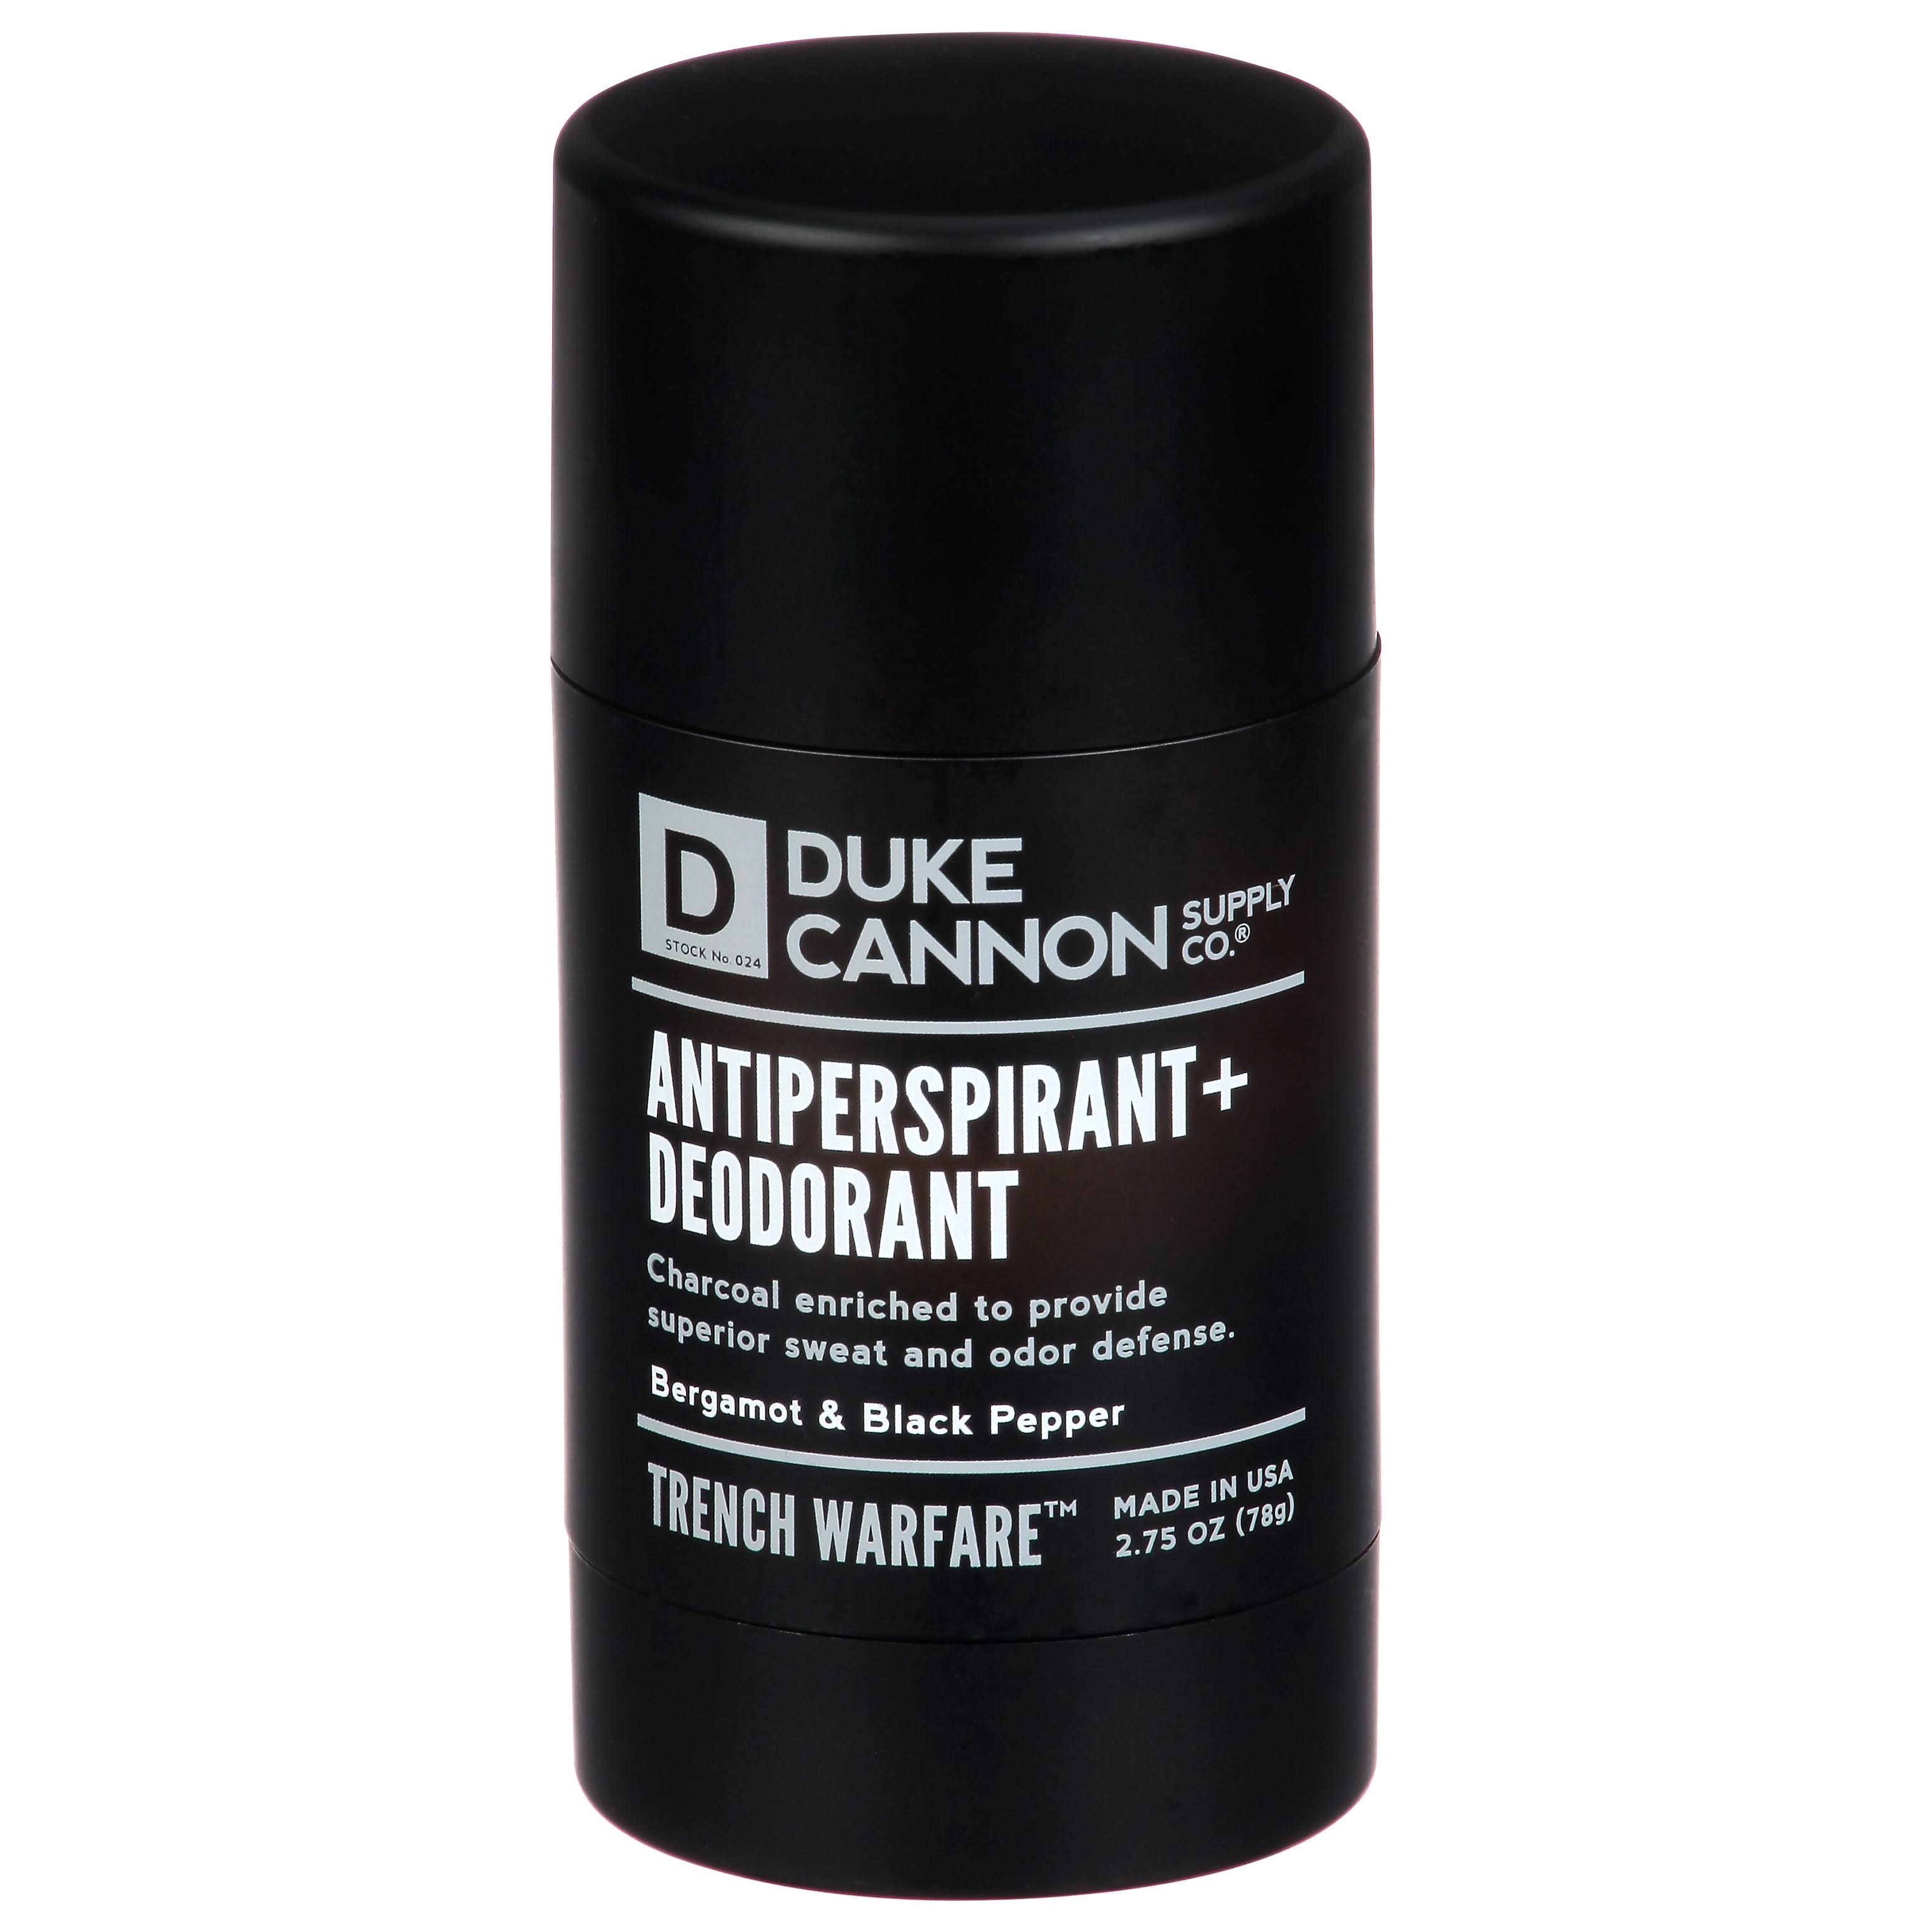 Duke Cannon Supply Co. - Trench Warfare Antiperspirant & Deodorant, Be